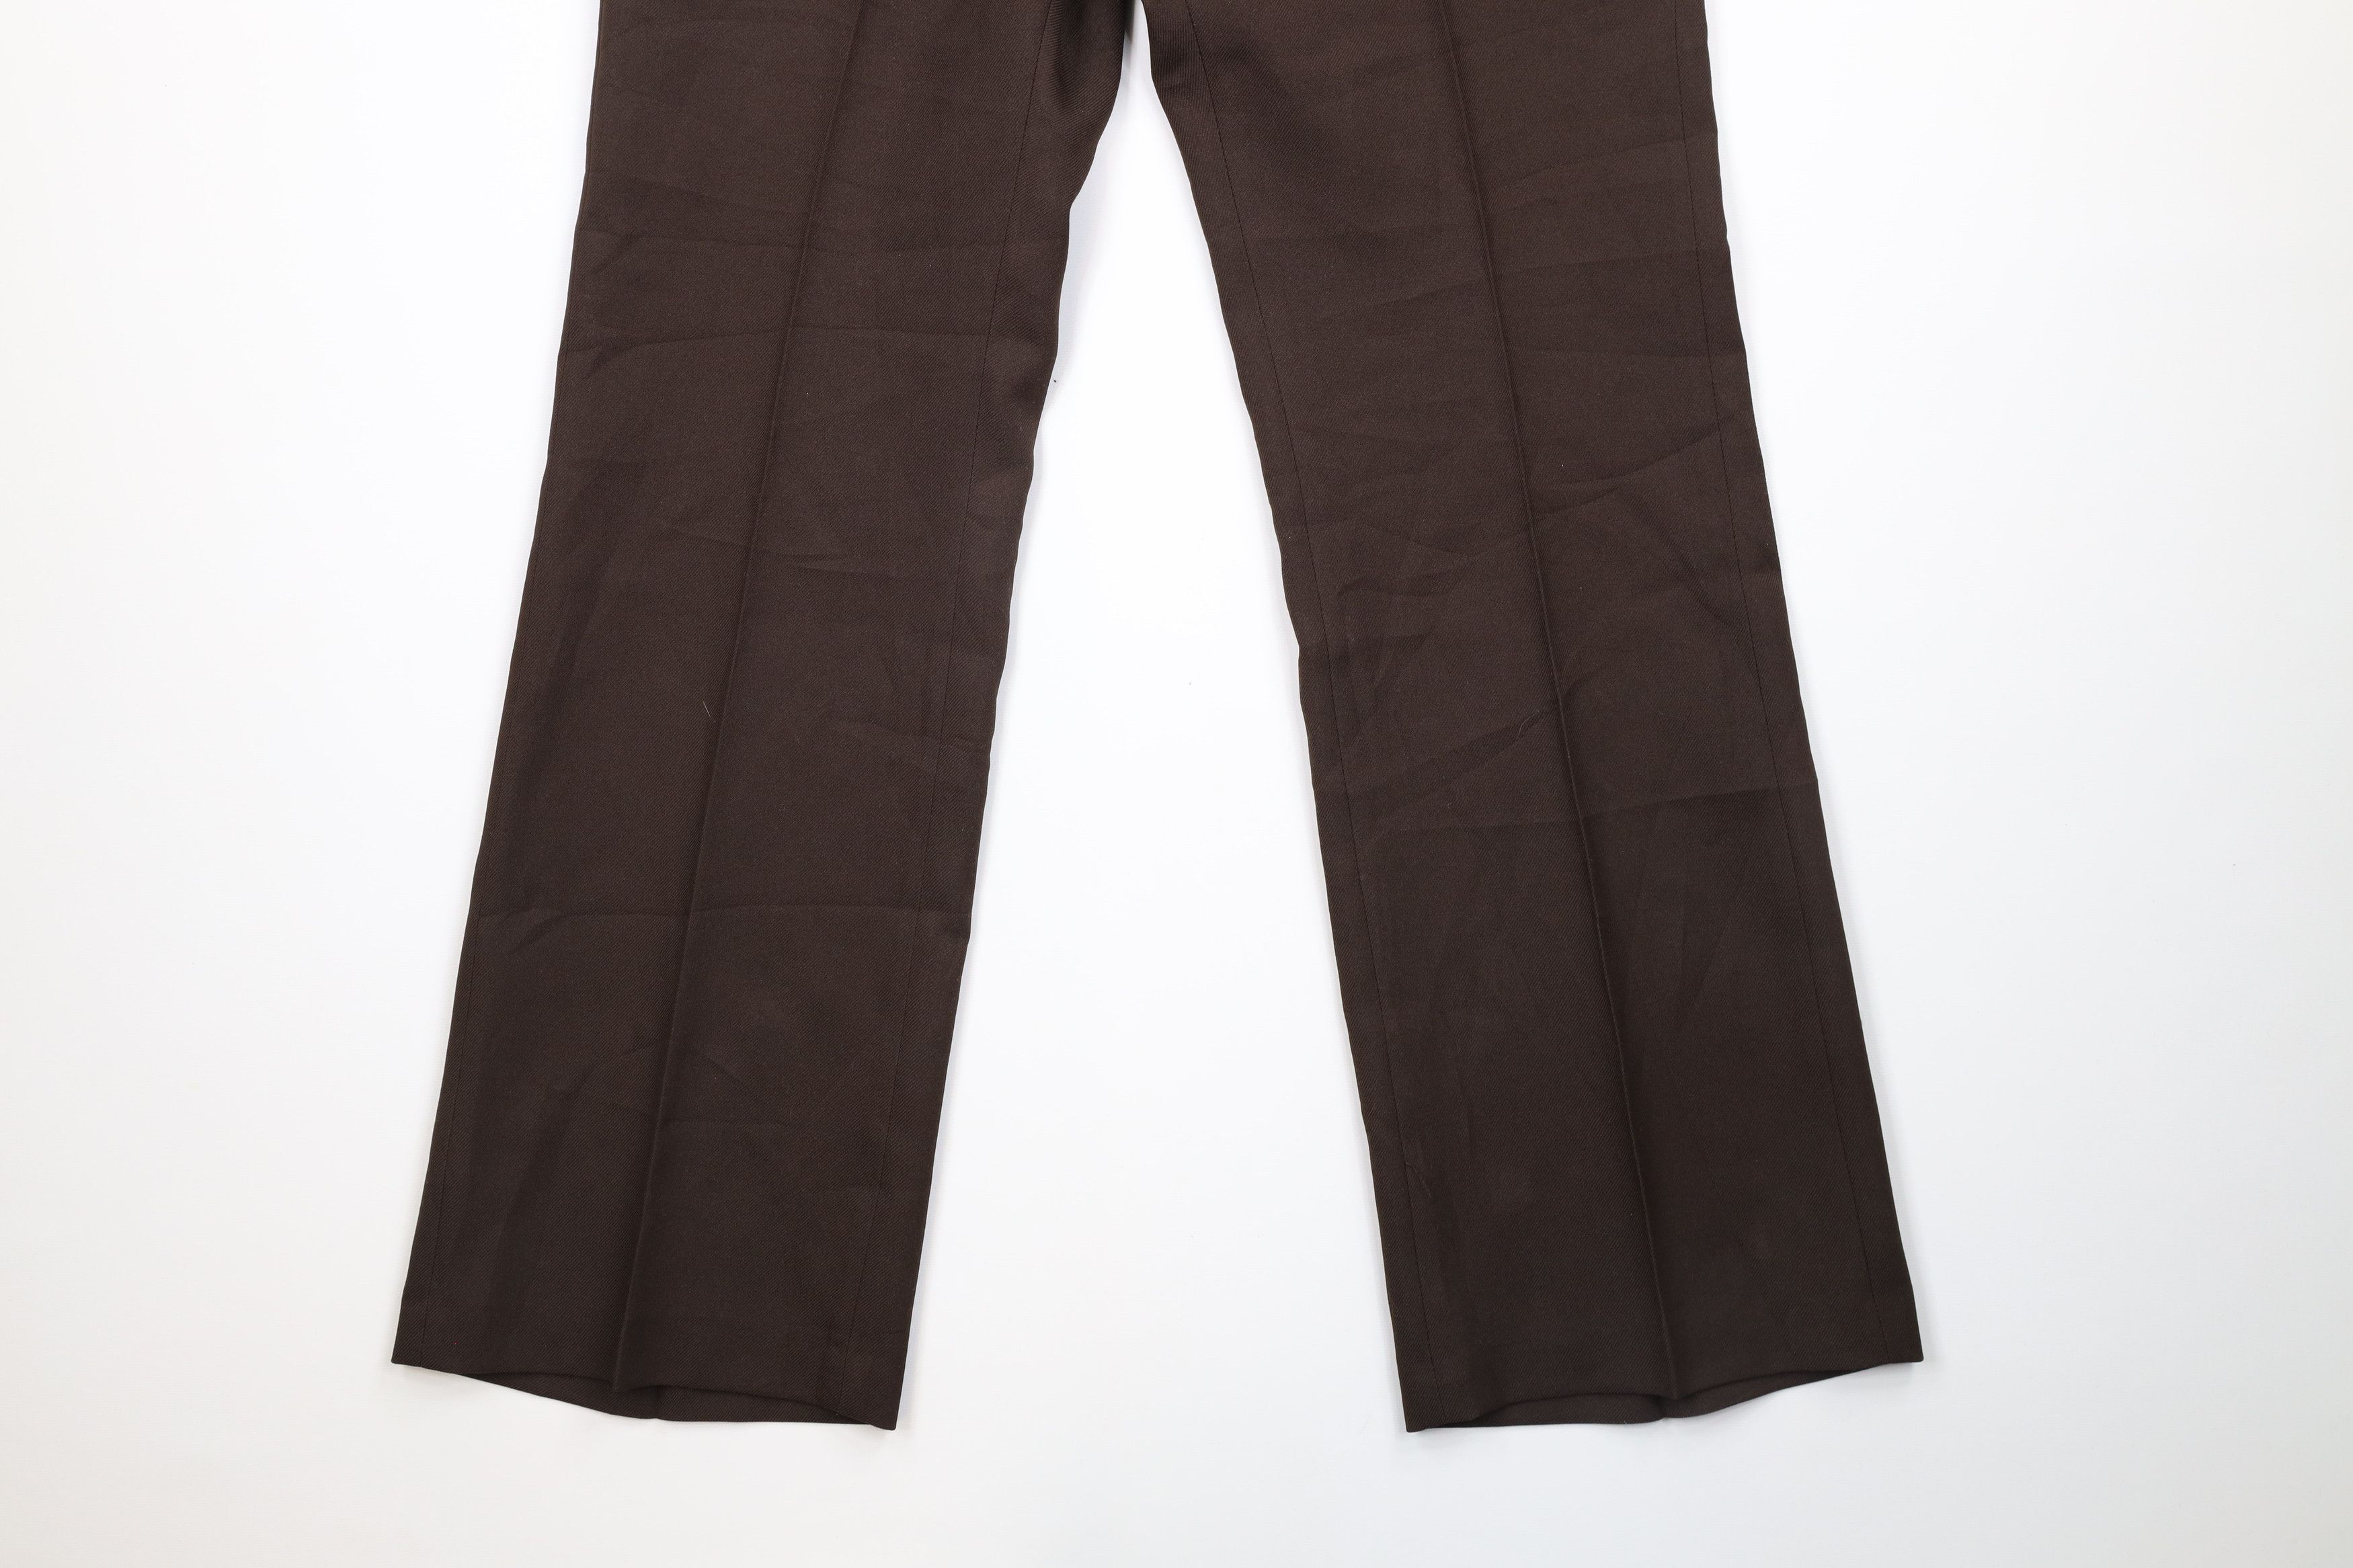 Vintage Vintage 70s Streetwear Knit Flared Bell Bottoms Pants Brown Size US 32 / EU 48 - 4 Thumbnail